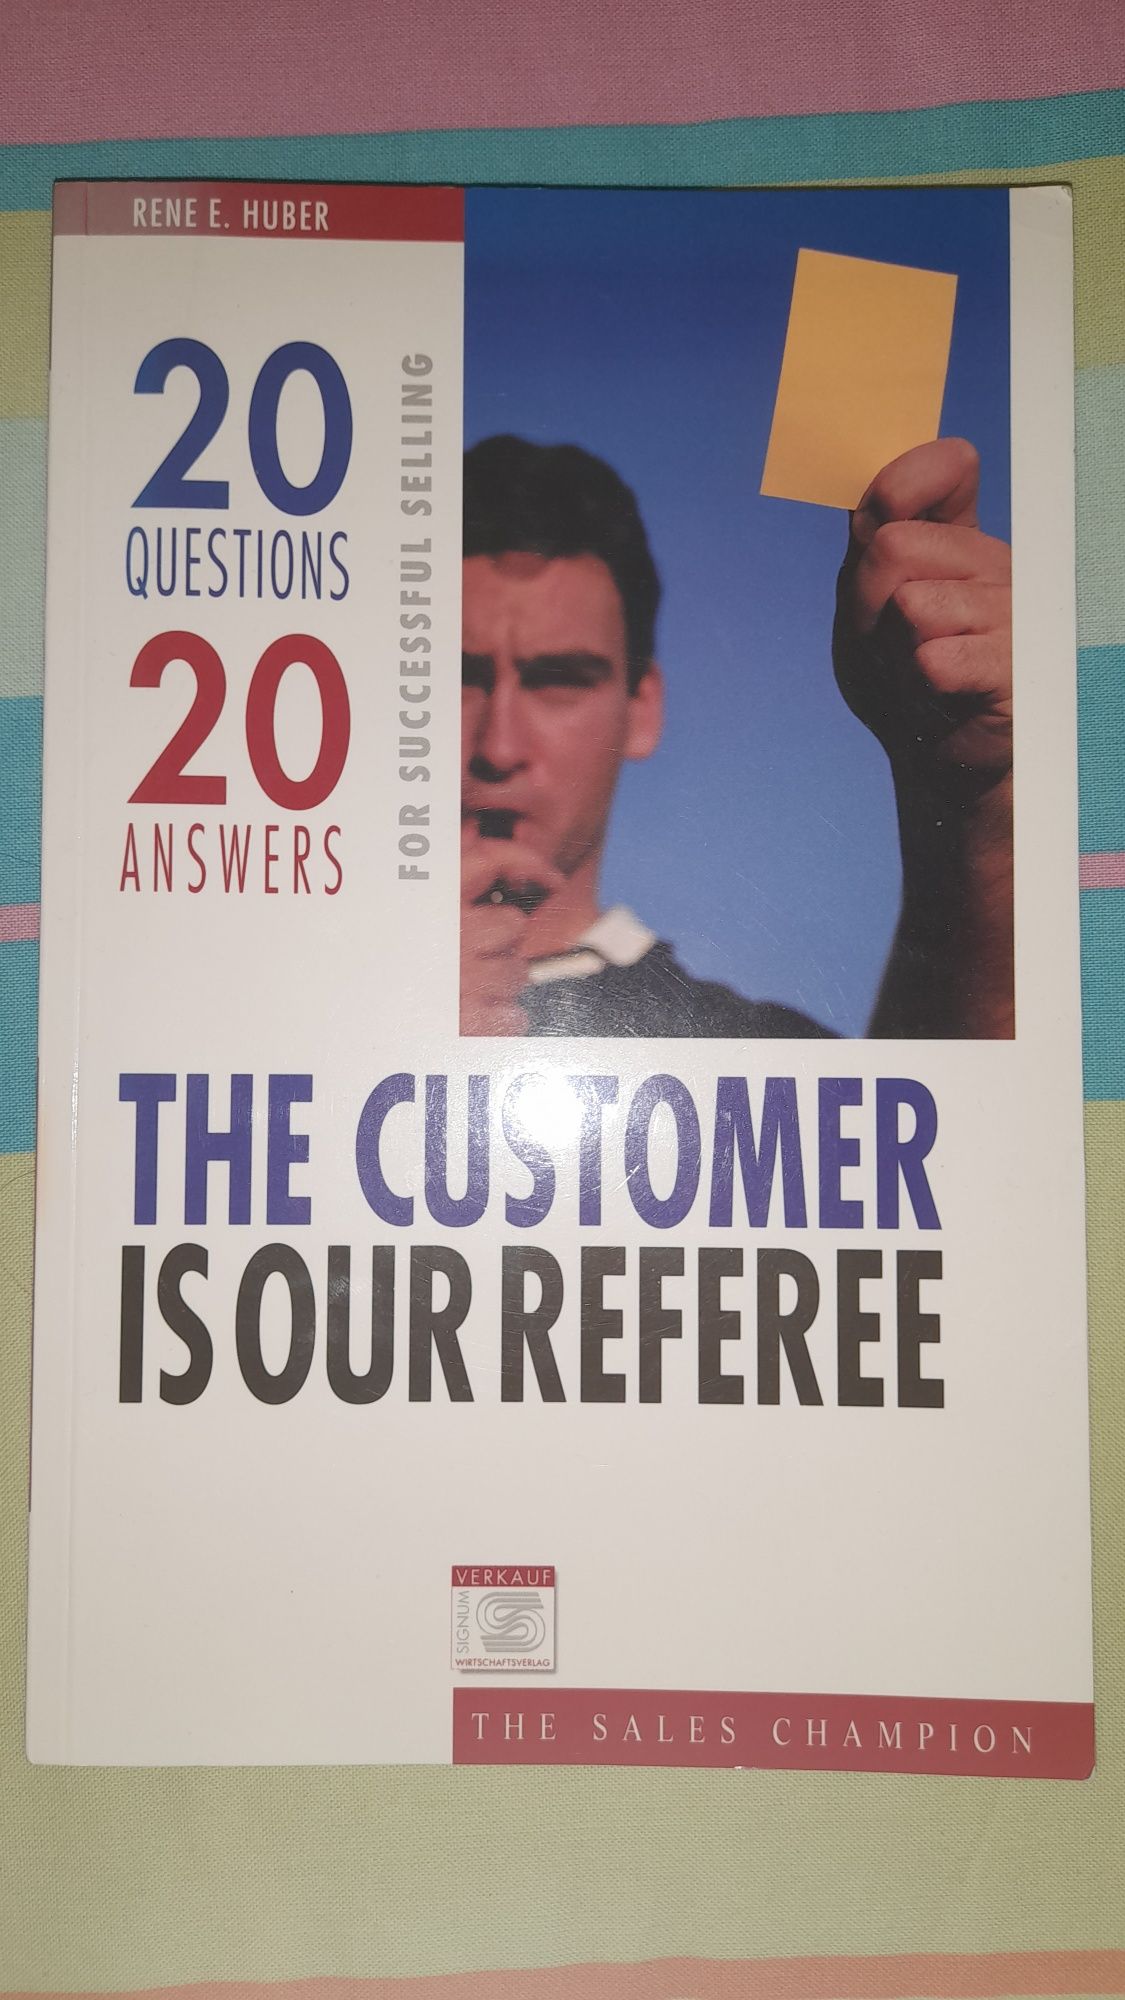 Livro "The Customer is our Referee" de Rene E. Huber